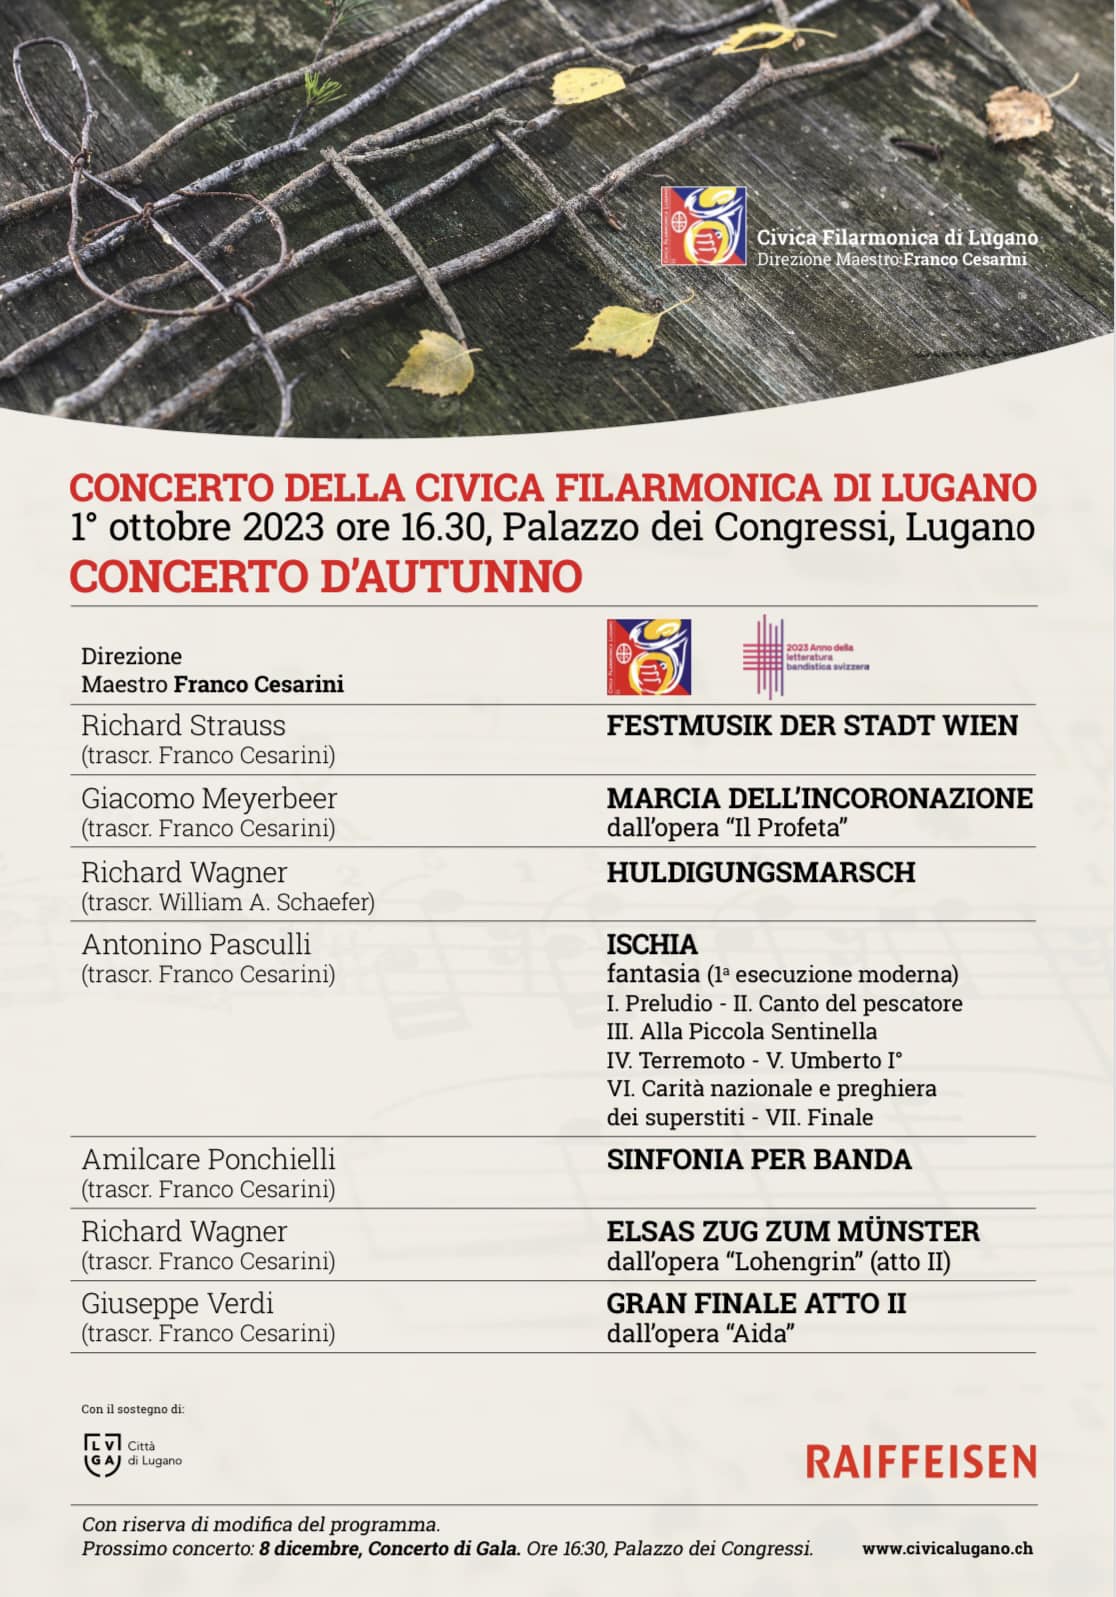 1st October, 2023: Autumn Concert of the Civica Filarmonica di Lugano – Première of Ischia by Antonino Pasculli, arranged by Franco Cesarini